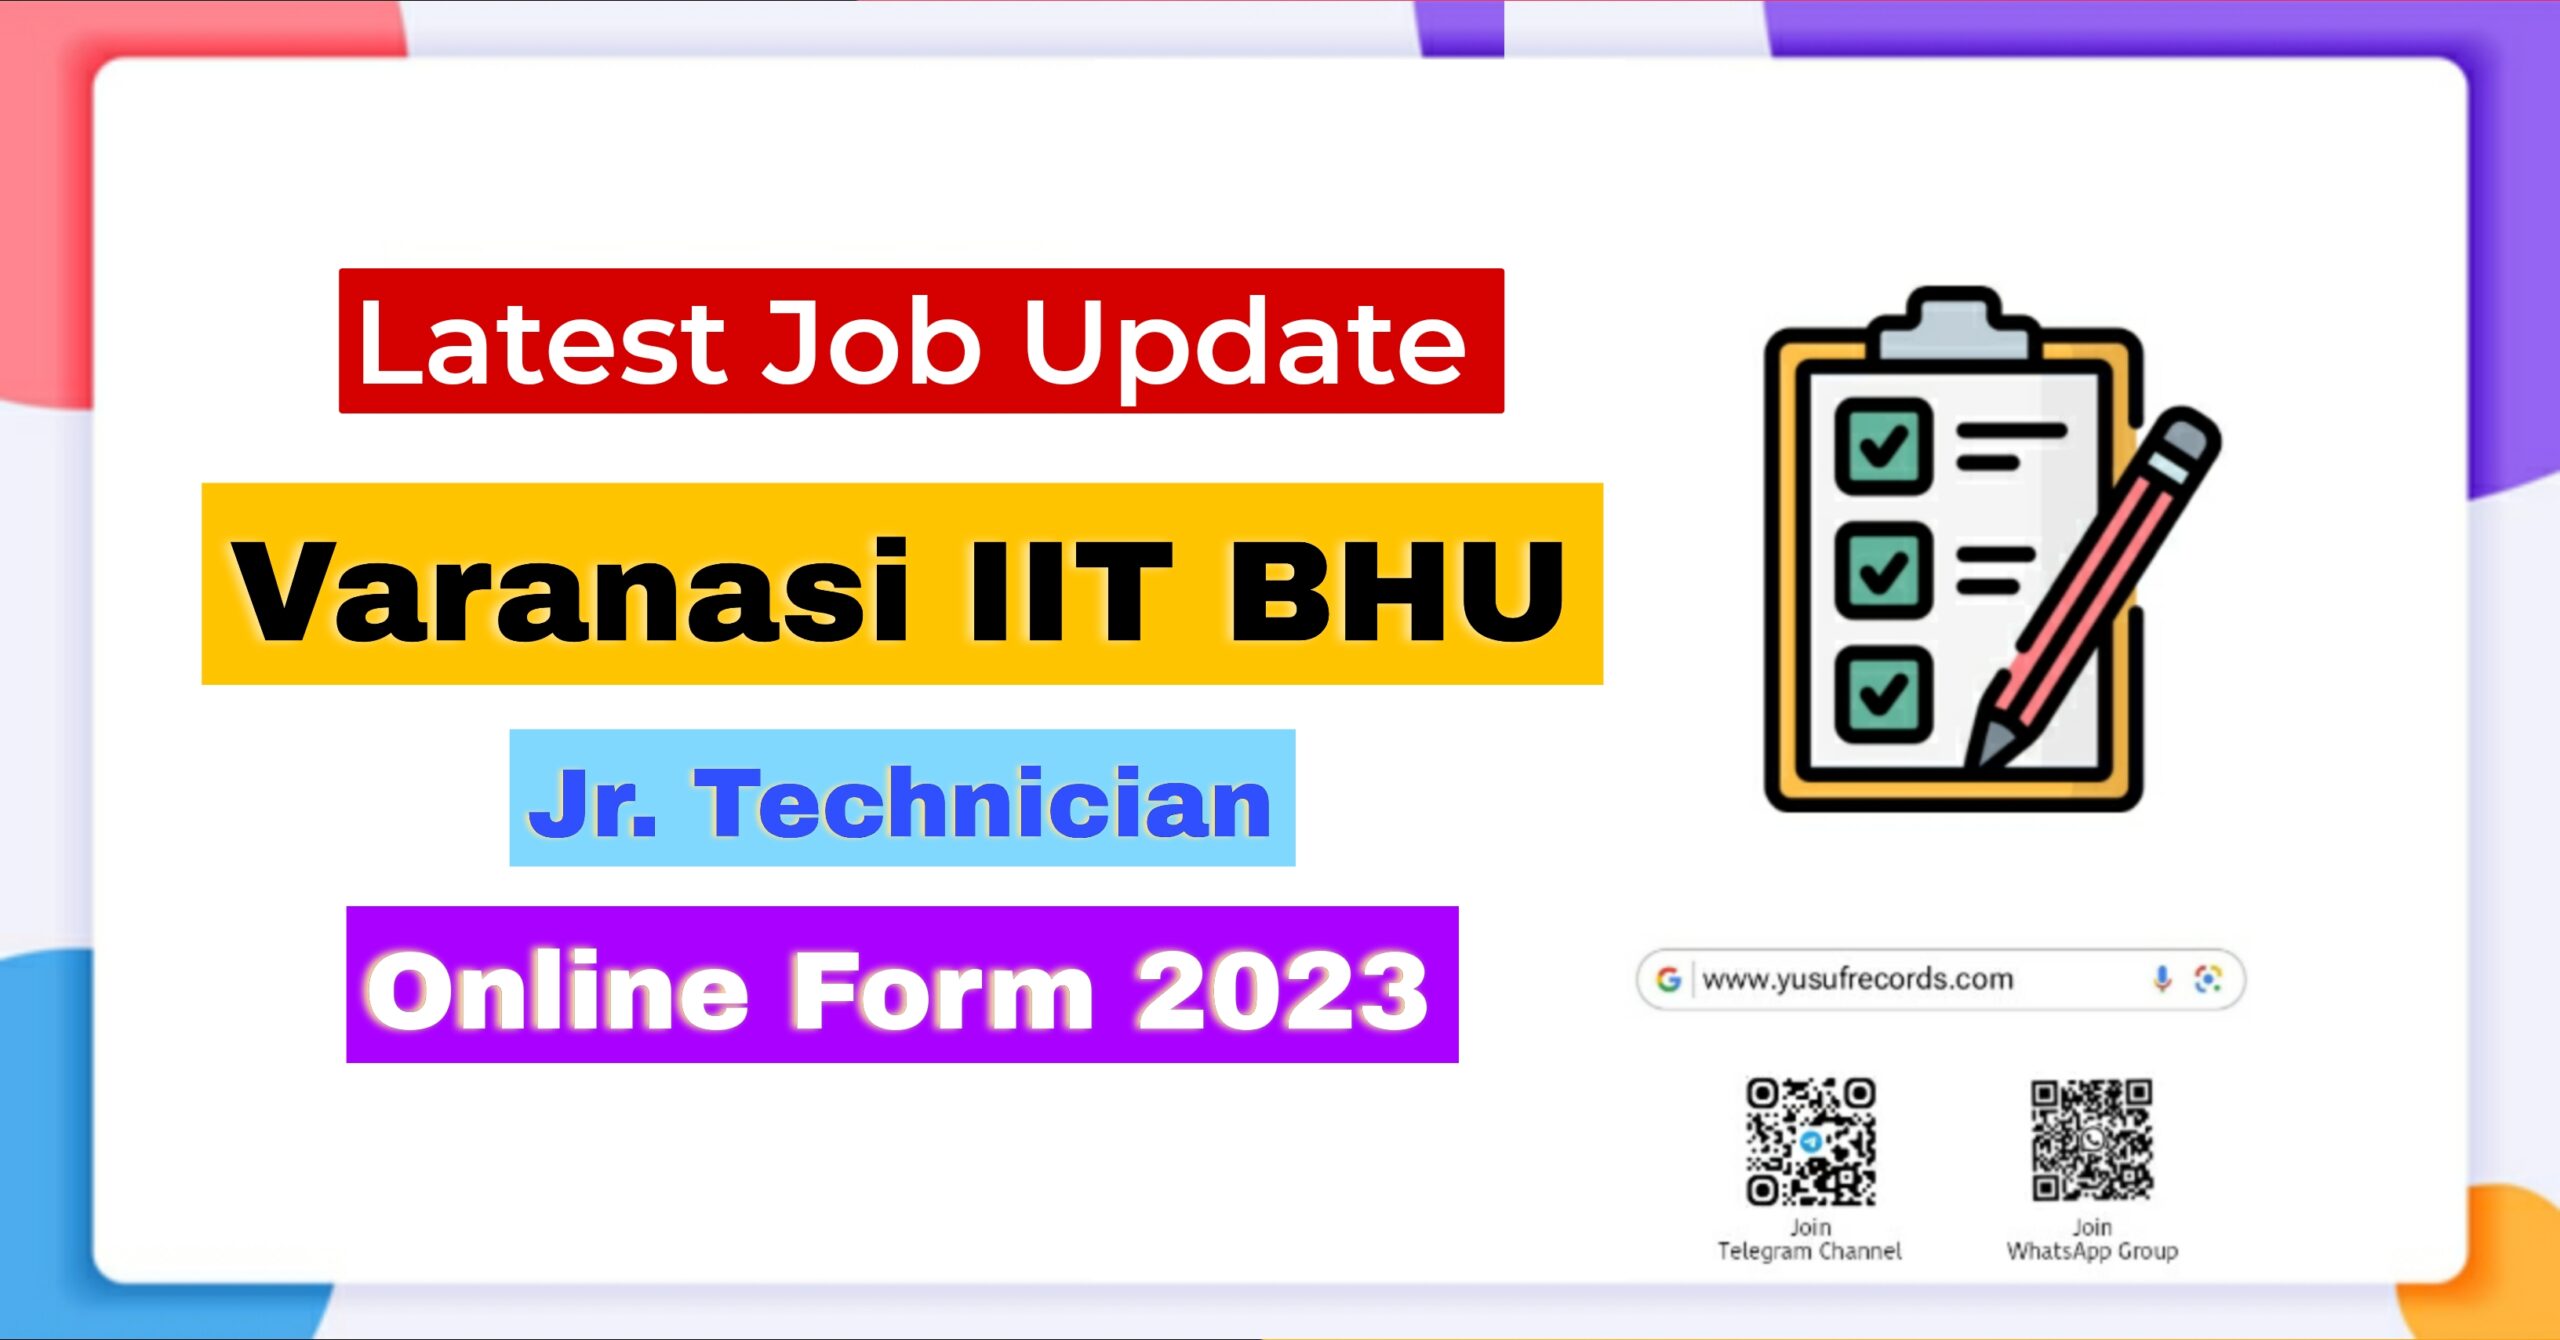 Varanasi IIT BHU Jr Technician Online Form